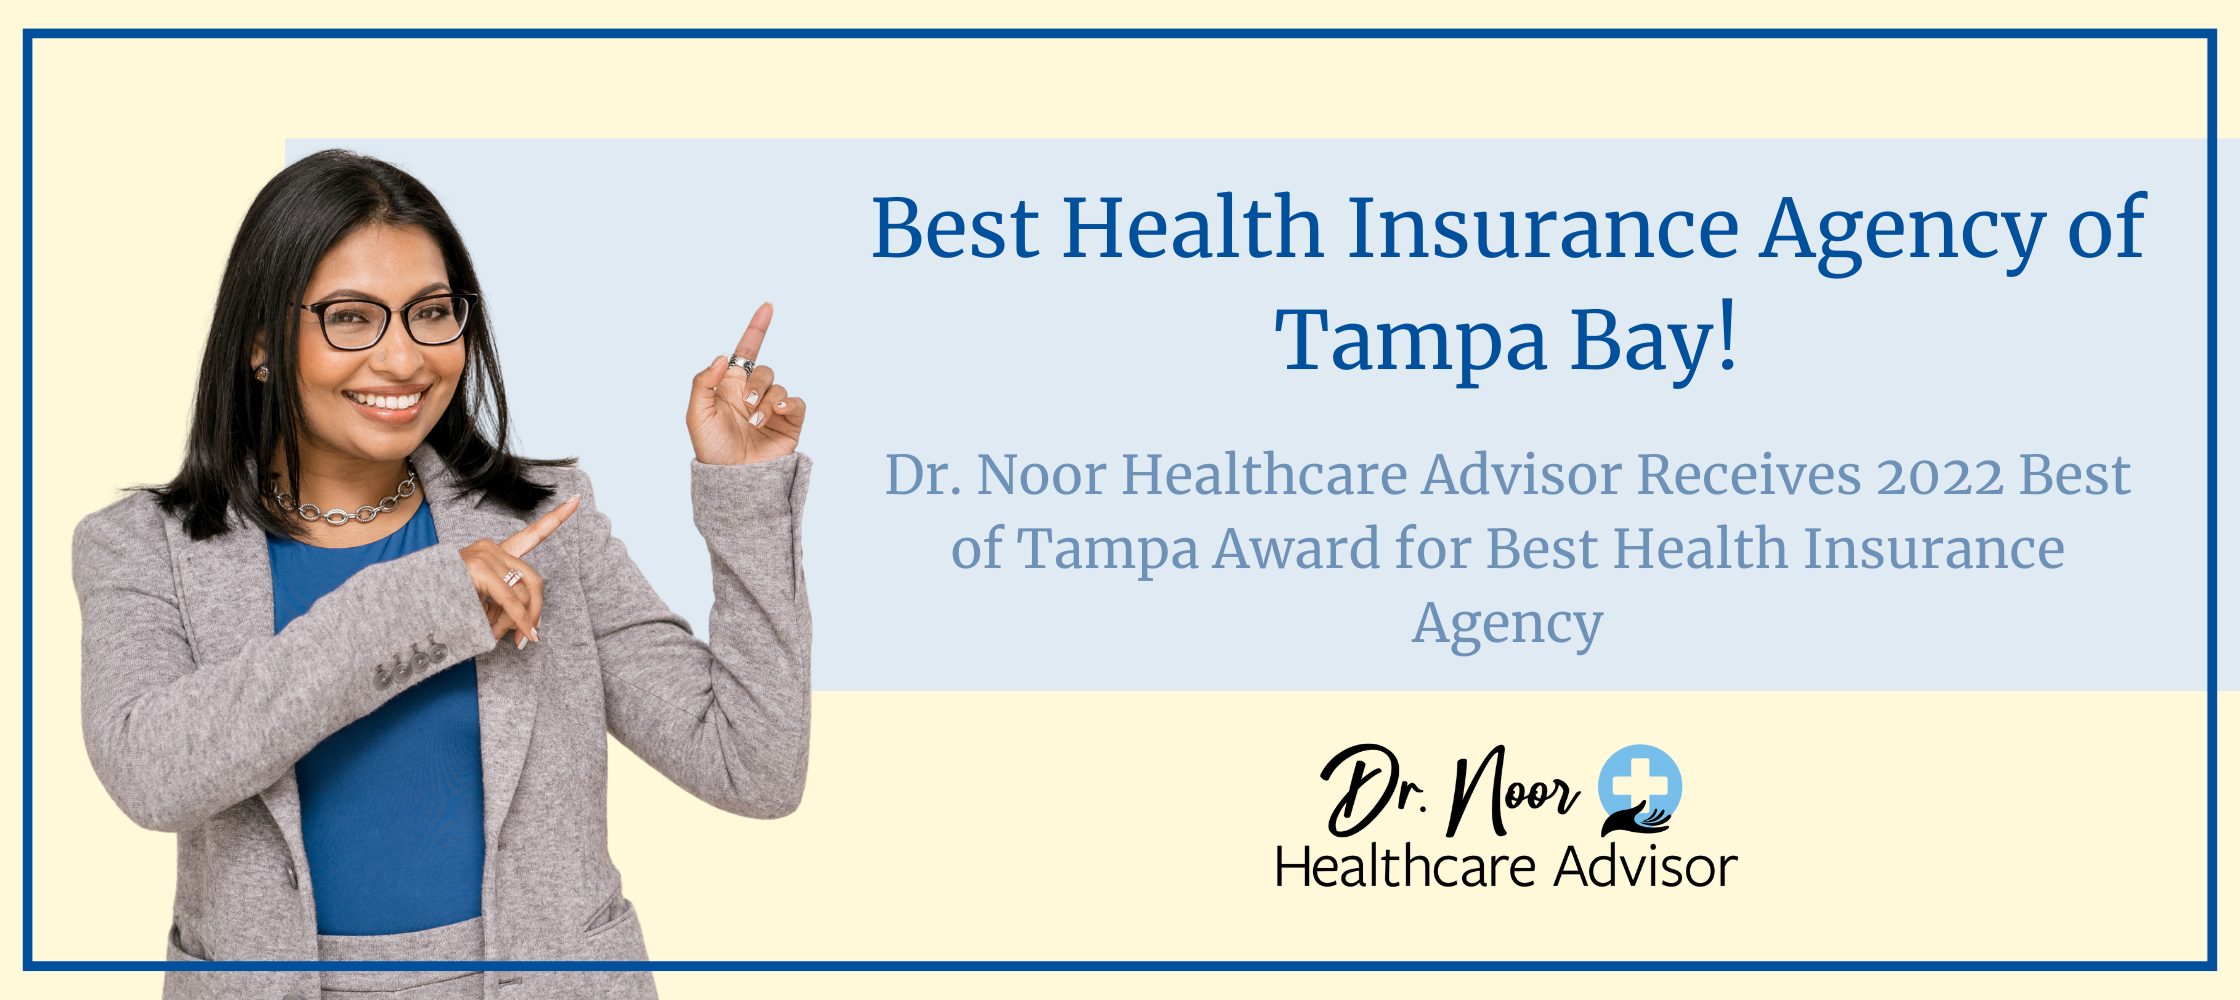 Dr. Noor Healthcare Advisor Receives 2022 Best of Tampa Award for Best Health Insurance Agency